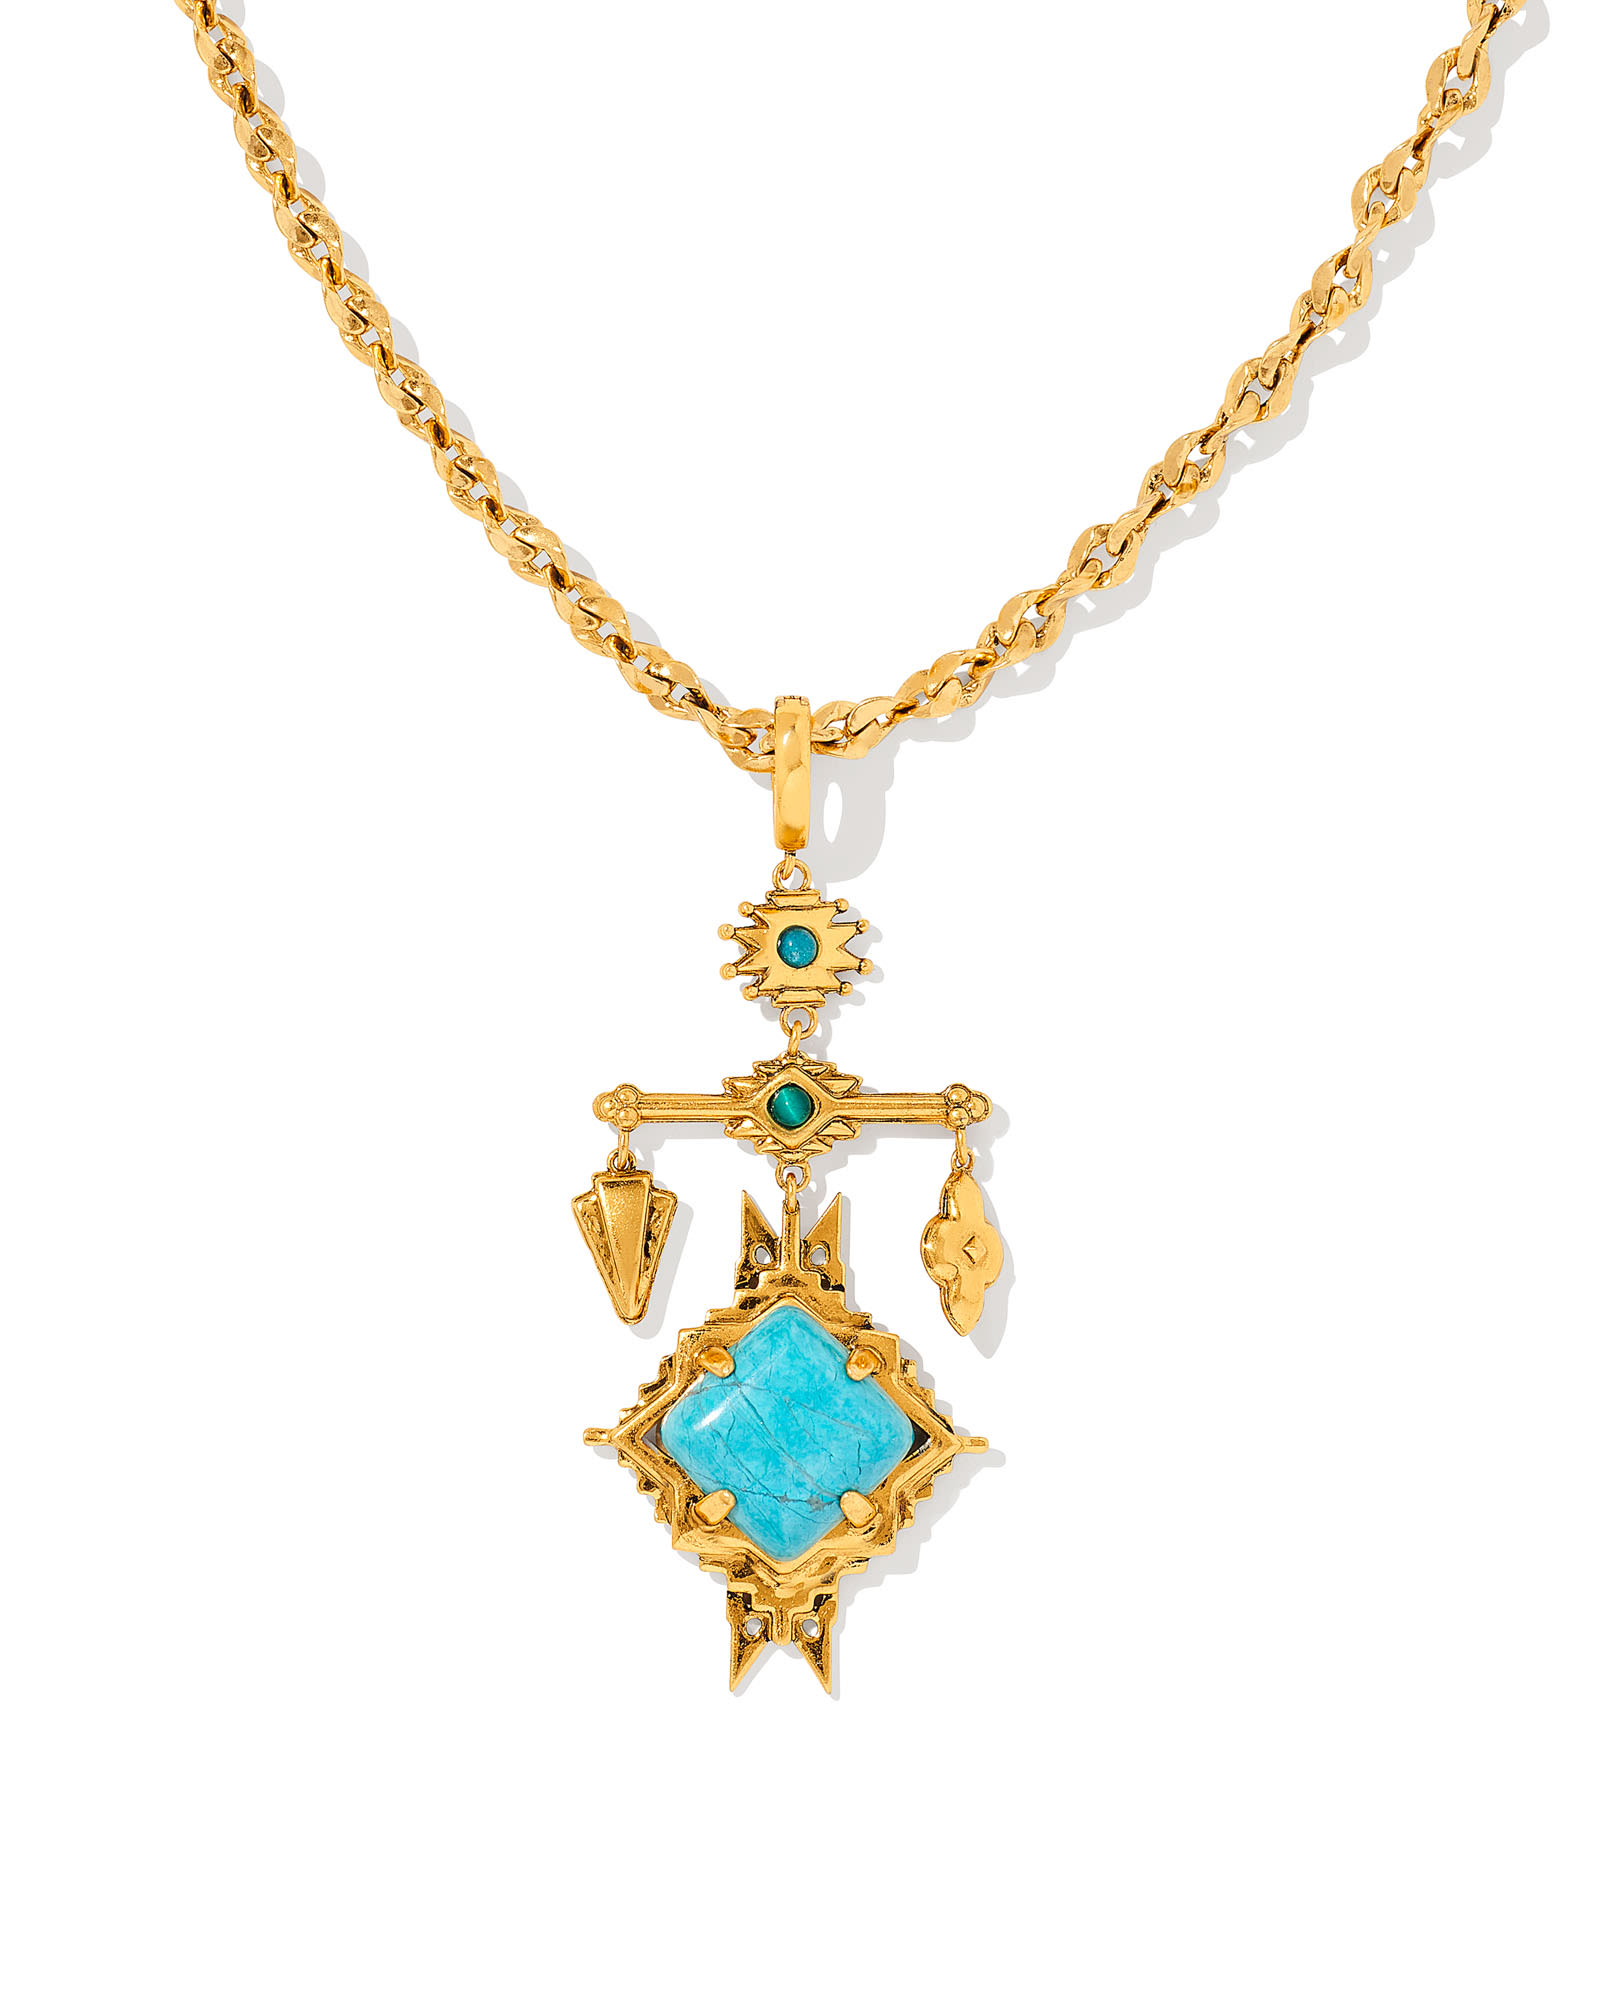 Cass Vintage Gold Large Long Pendant Necklace in Variegated Dark Teal Magnesite